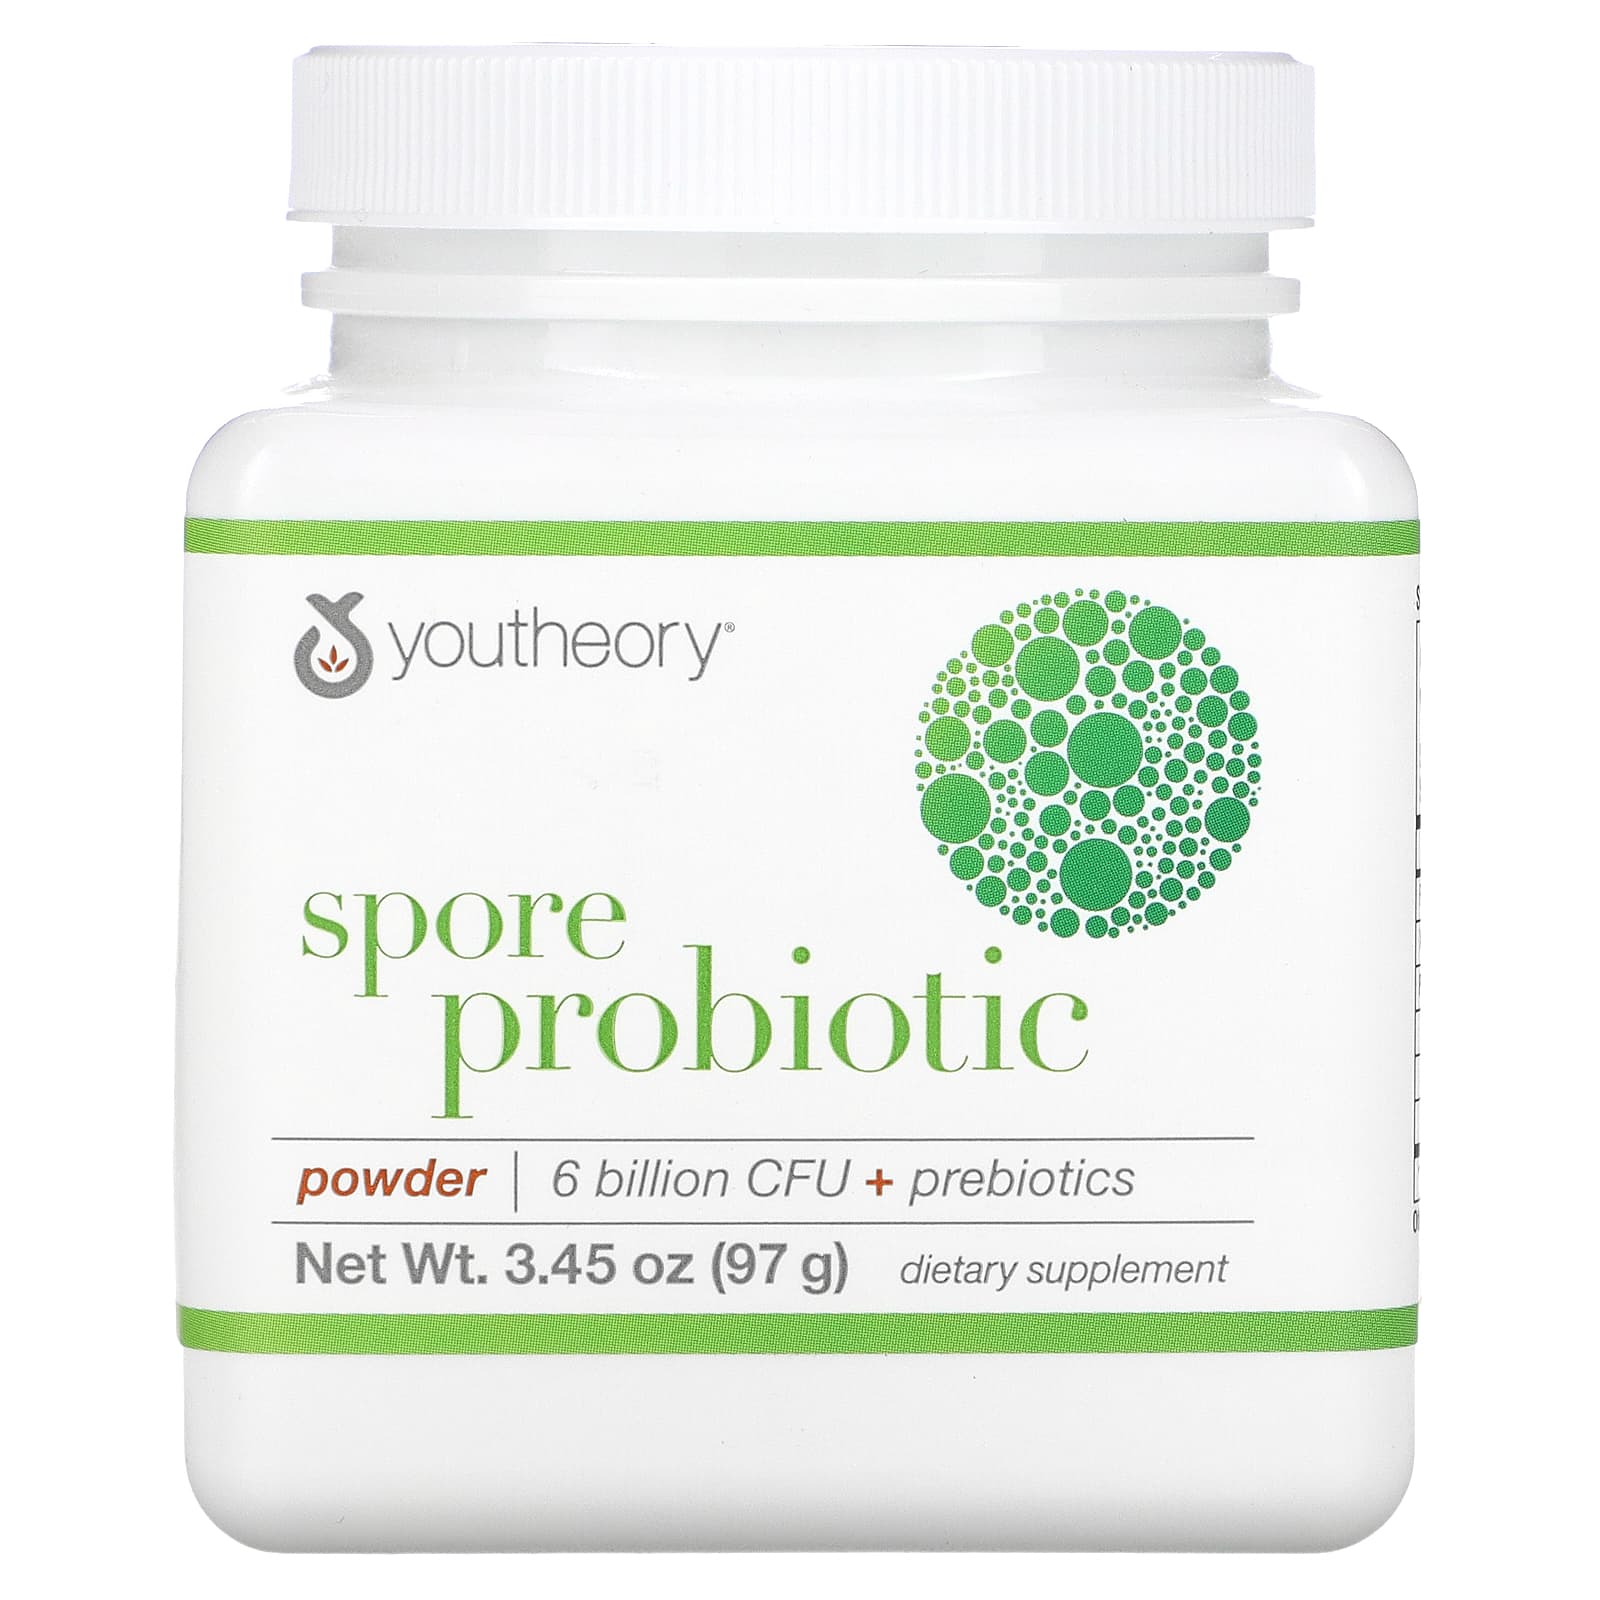 Youtheory Spore Probiotic Powder 6 Billion CFU 3.45 oz (97 g)